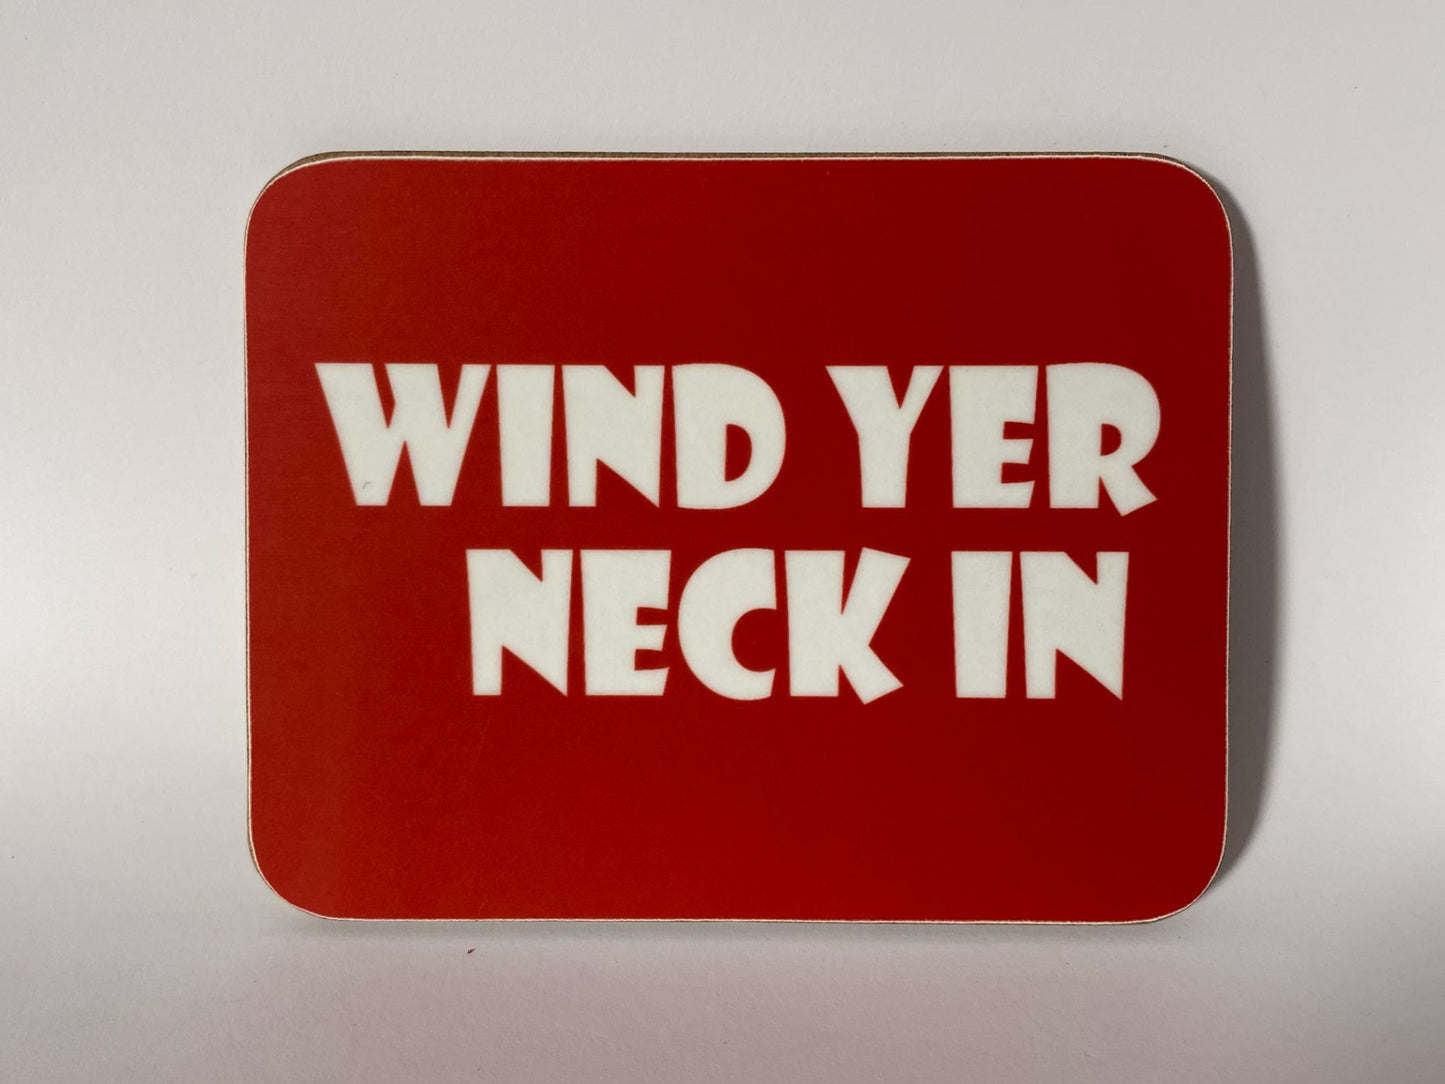 Wind yer neck in